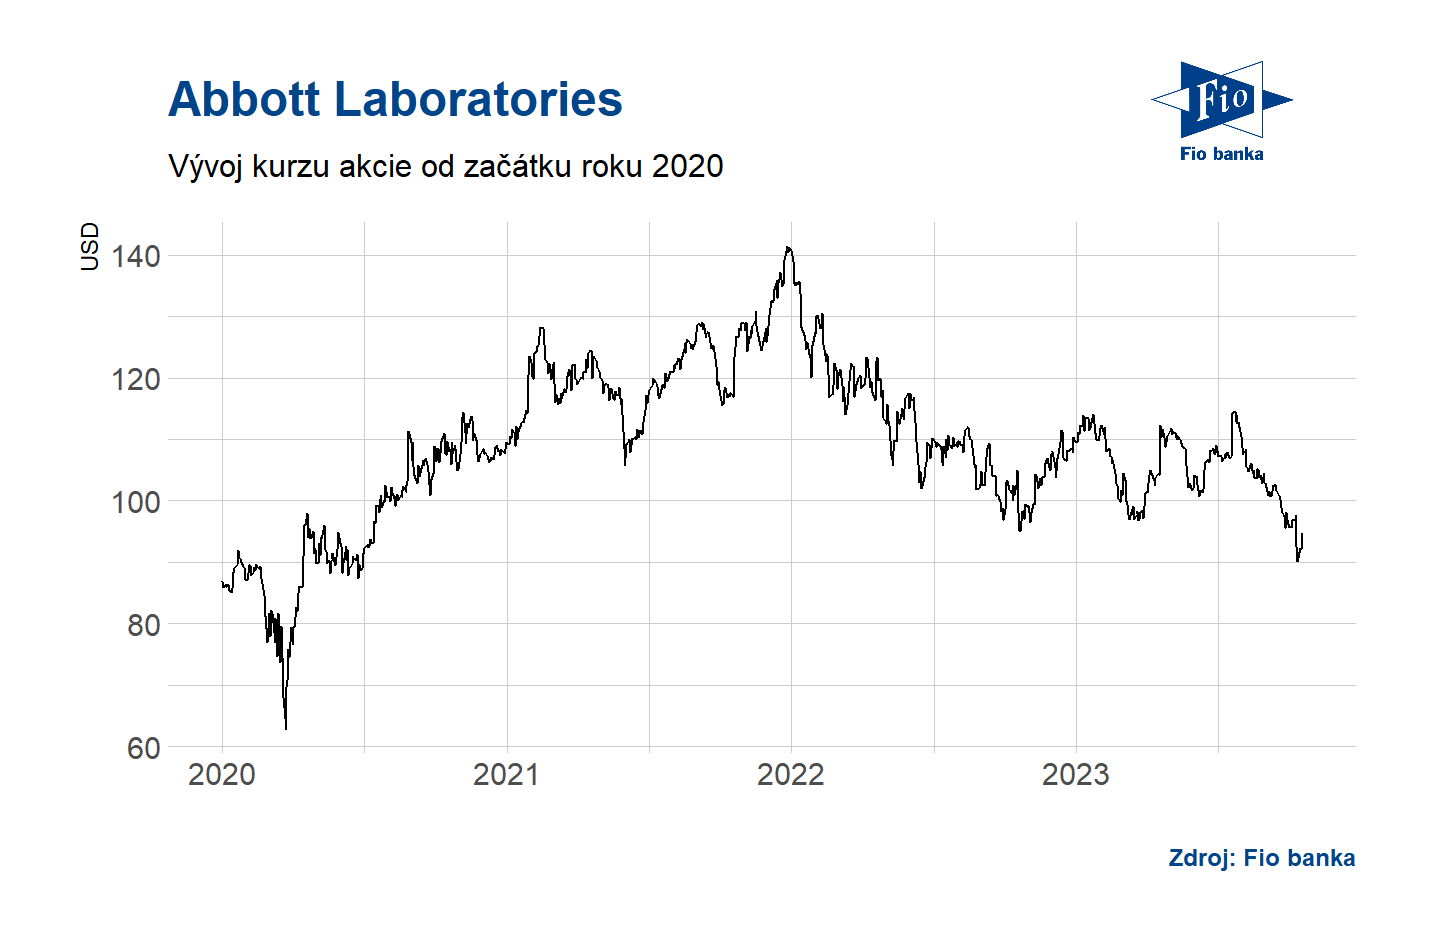 Vývoj akcií Abbott Laboratories